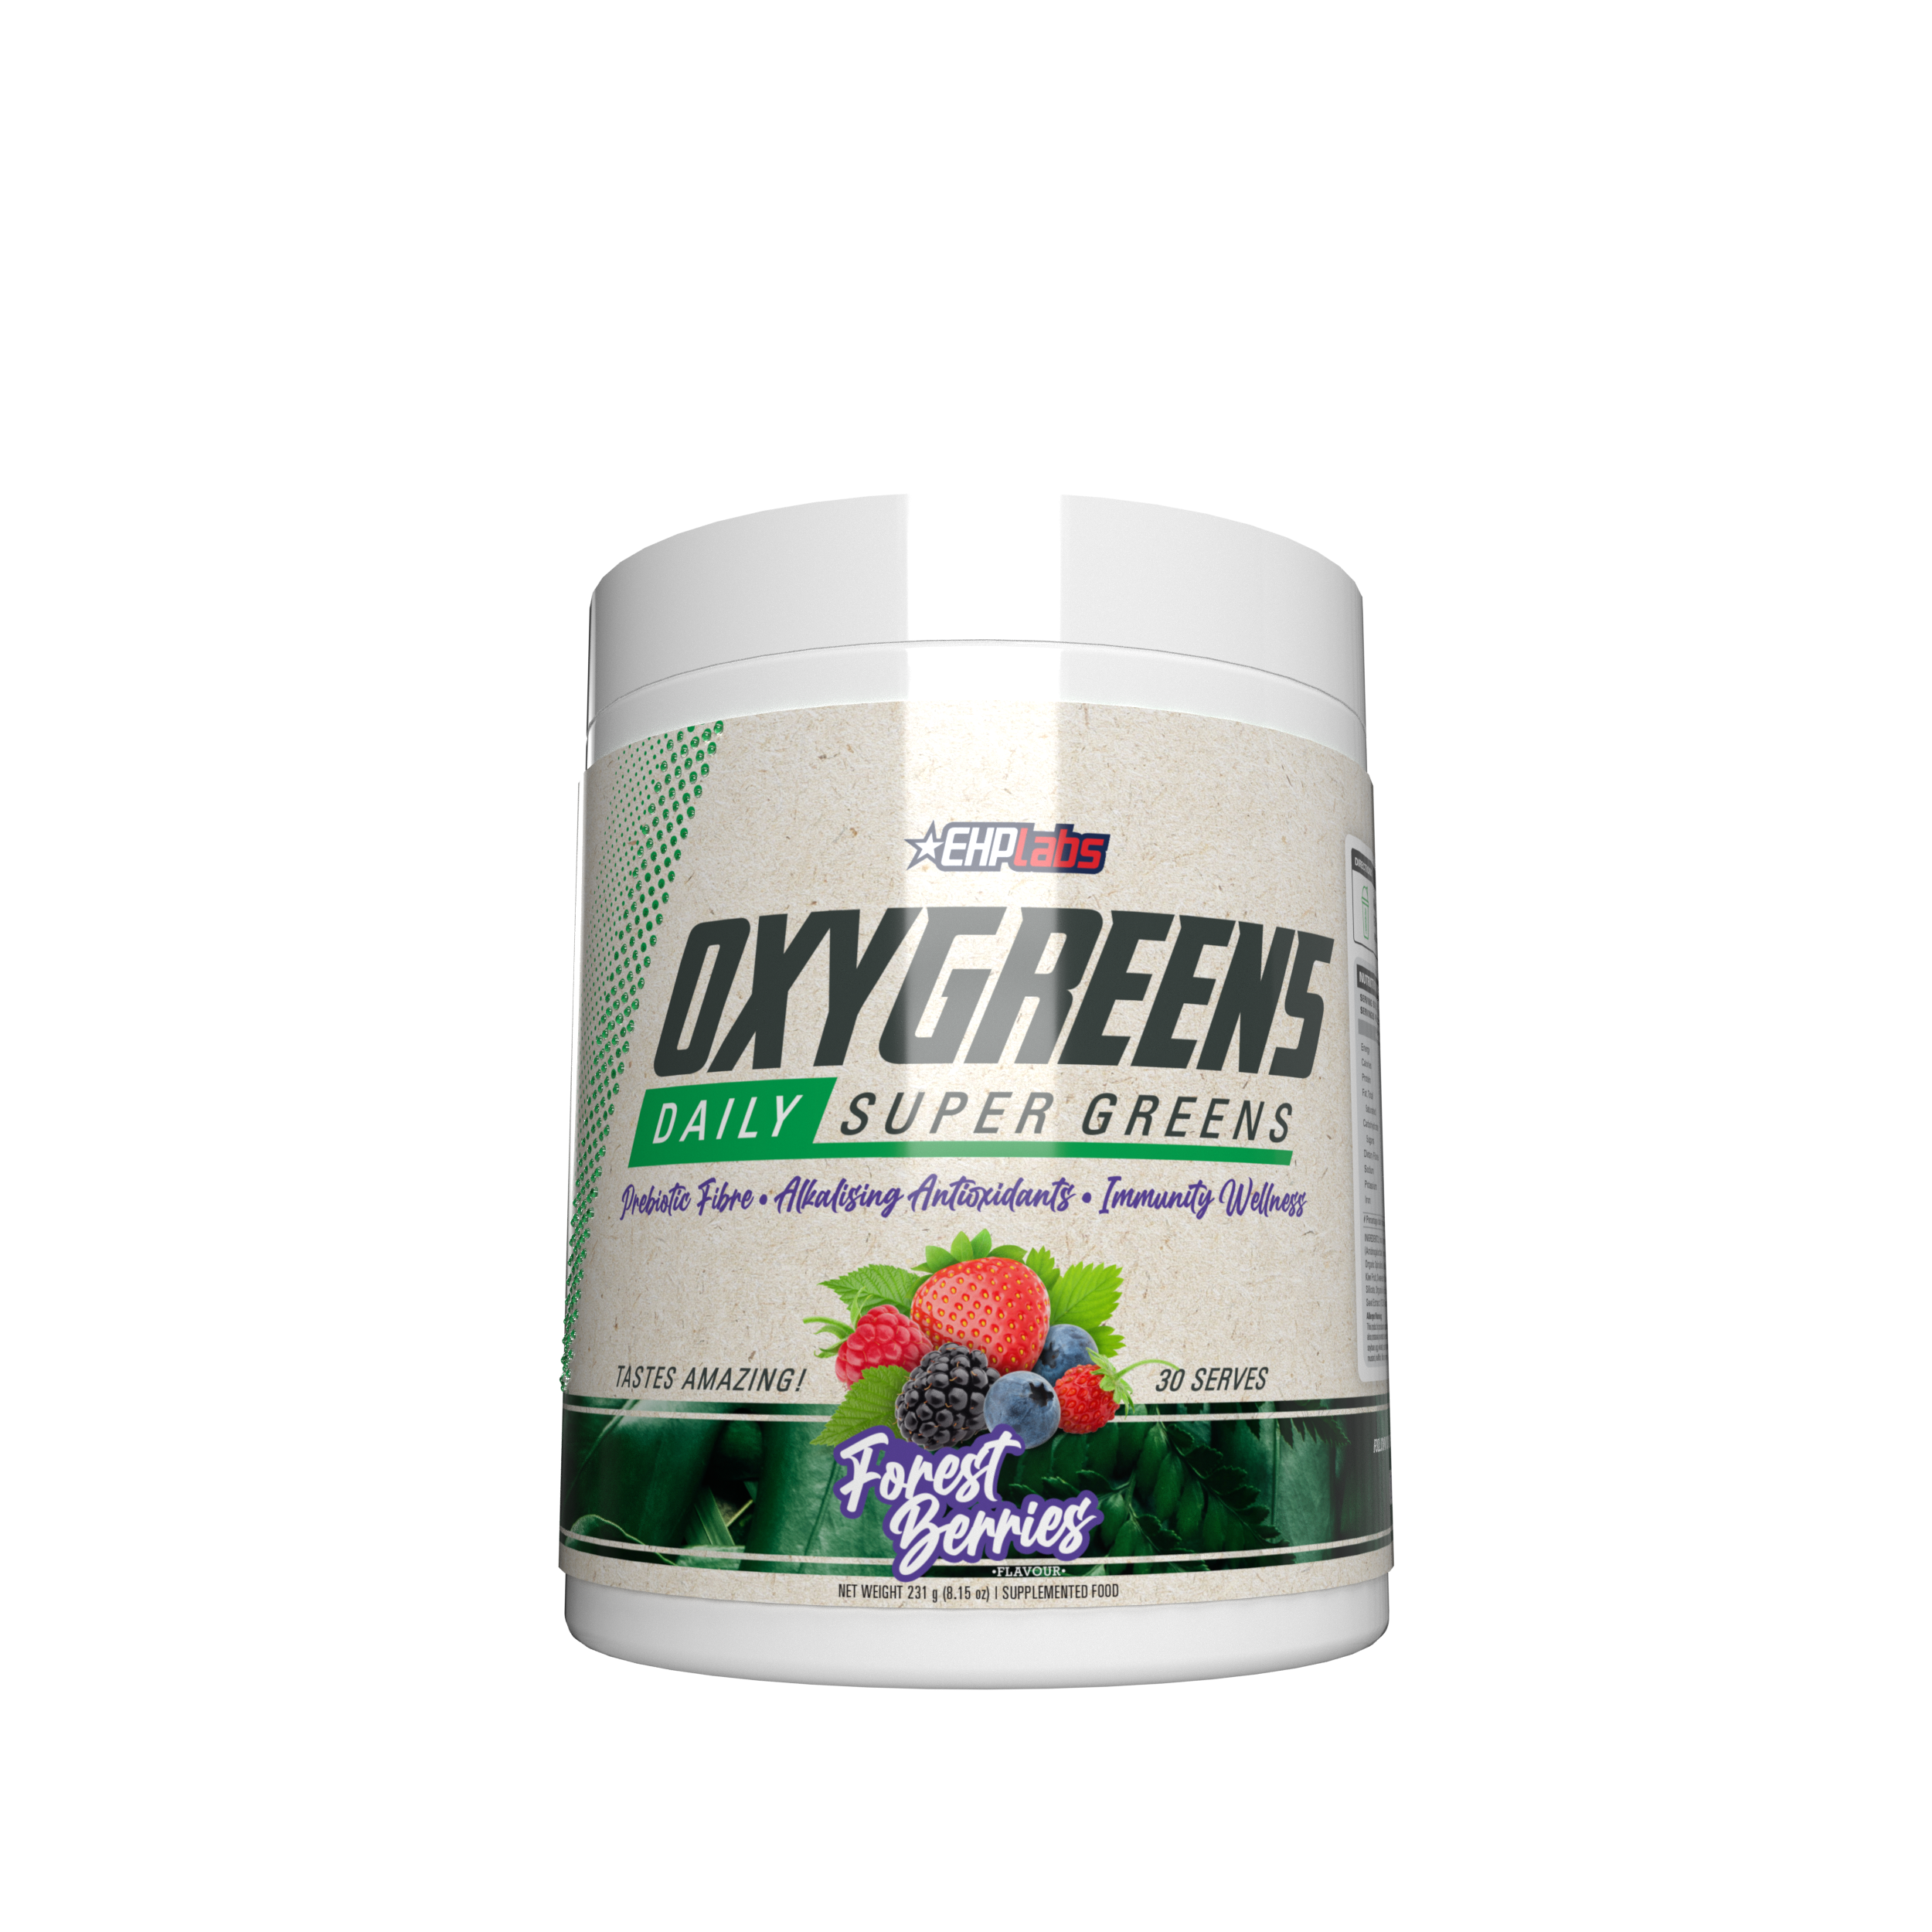 OXYGREENS - DAILY SUPER GREENS POWDER